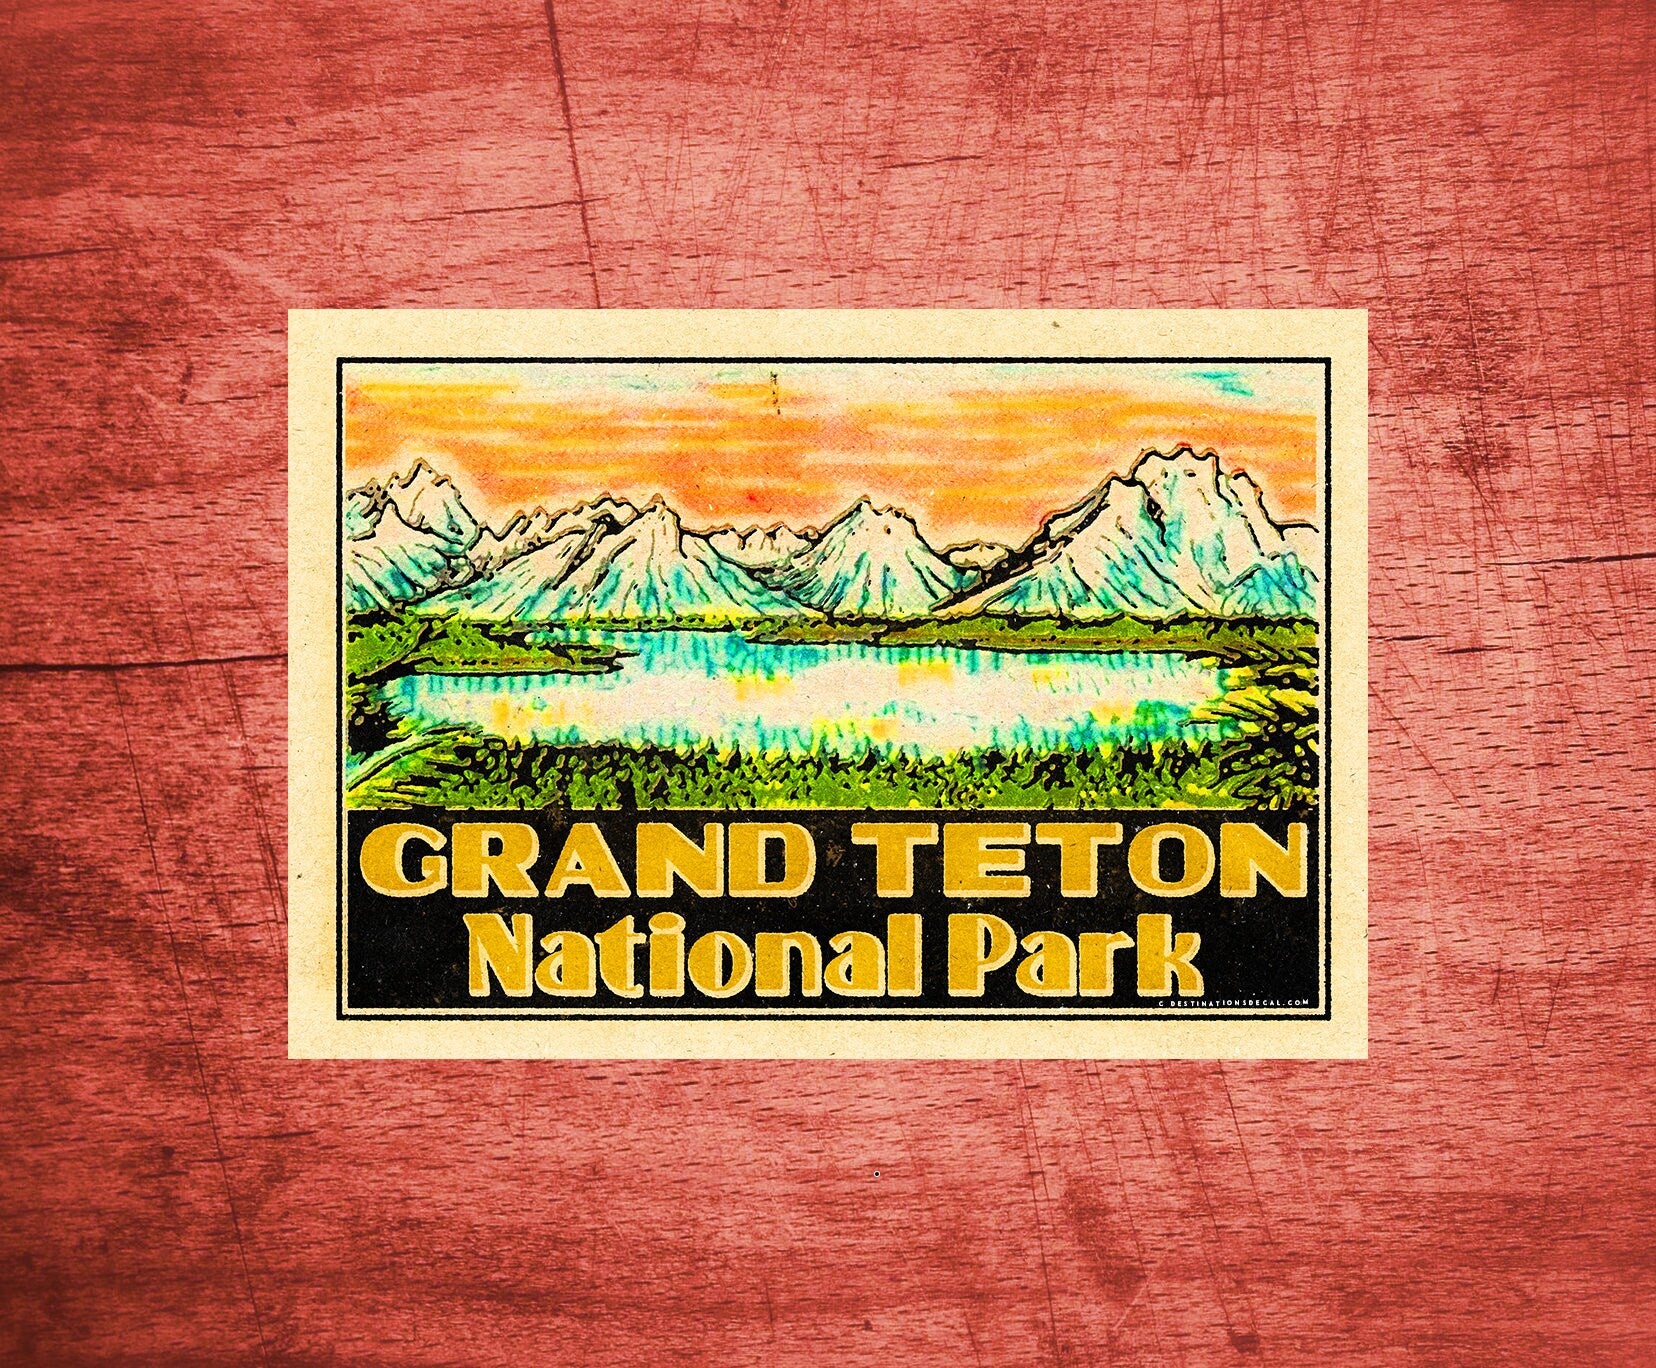 Grand Teton National Park 4" x 2.8" Decal Sticker Vinyl Vintage